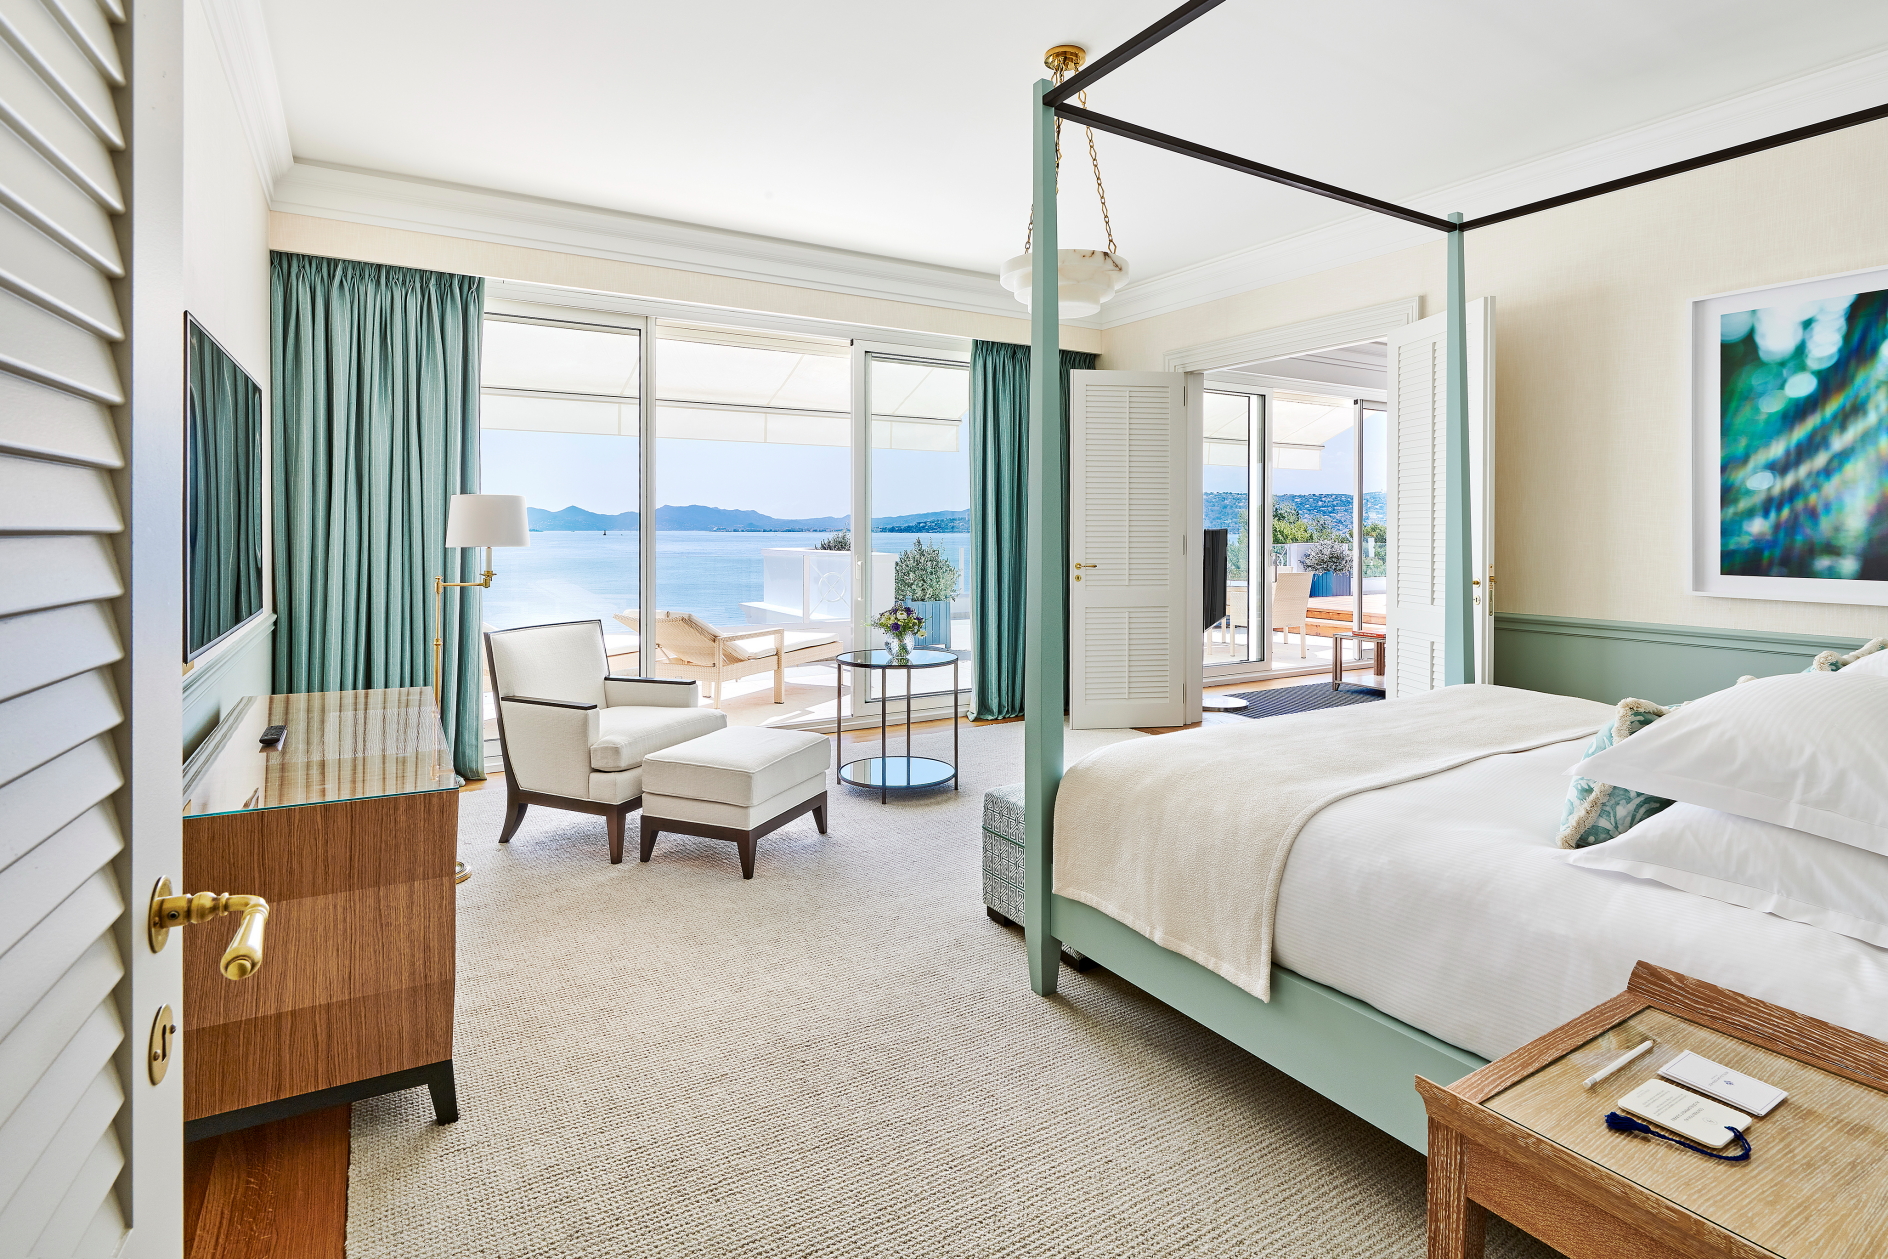 Recently renovated suite at Hotel du Cap-Eden-Roc.  Image: JMSordello.  Click to enlarge.